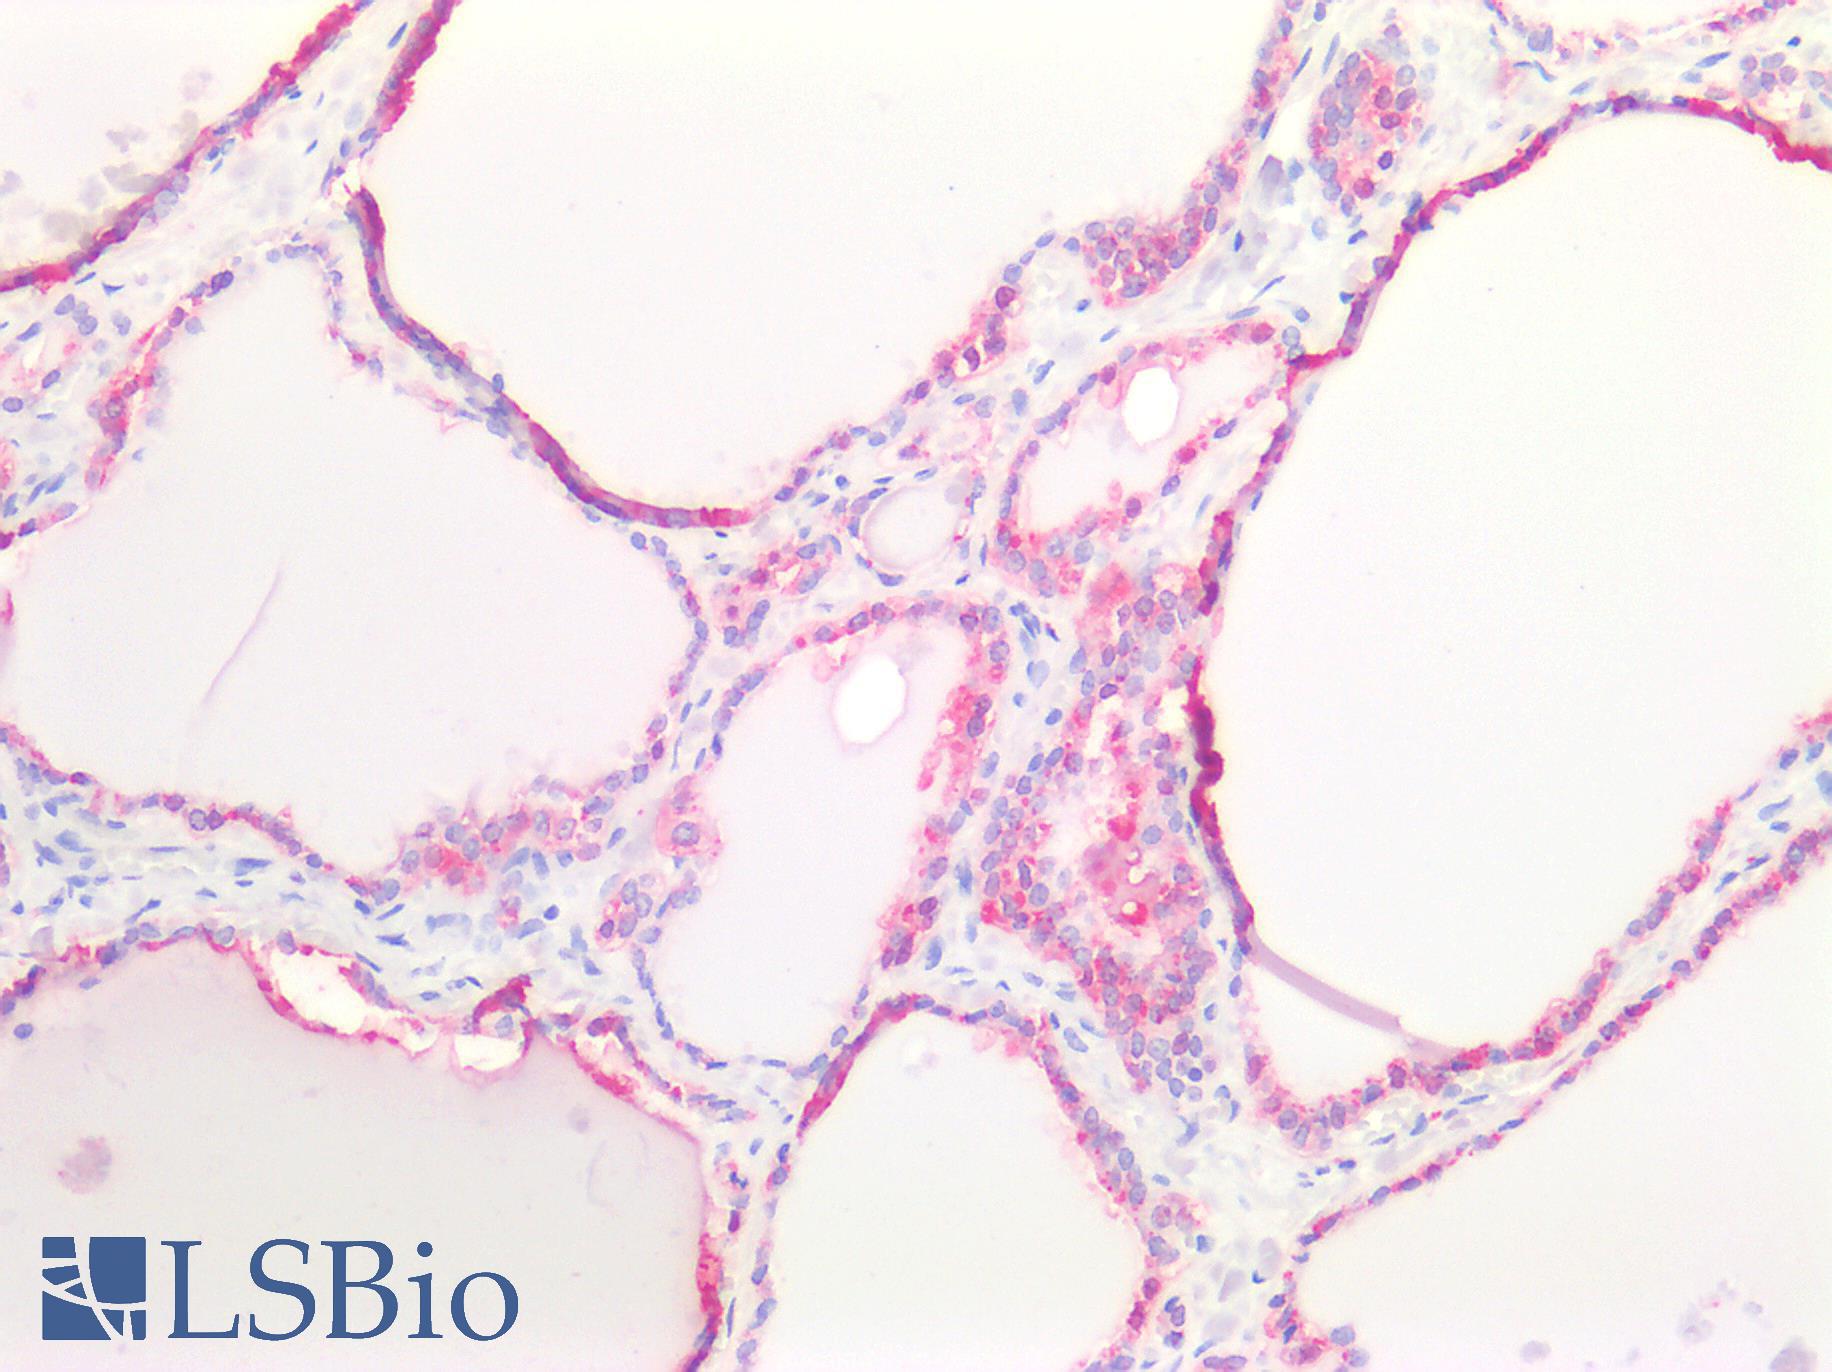 CTSB / Cathepsin B Antibody - Human Thyroid: Formalin-Fixed, Paraffin-Embedded (FFPE)